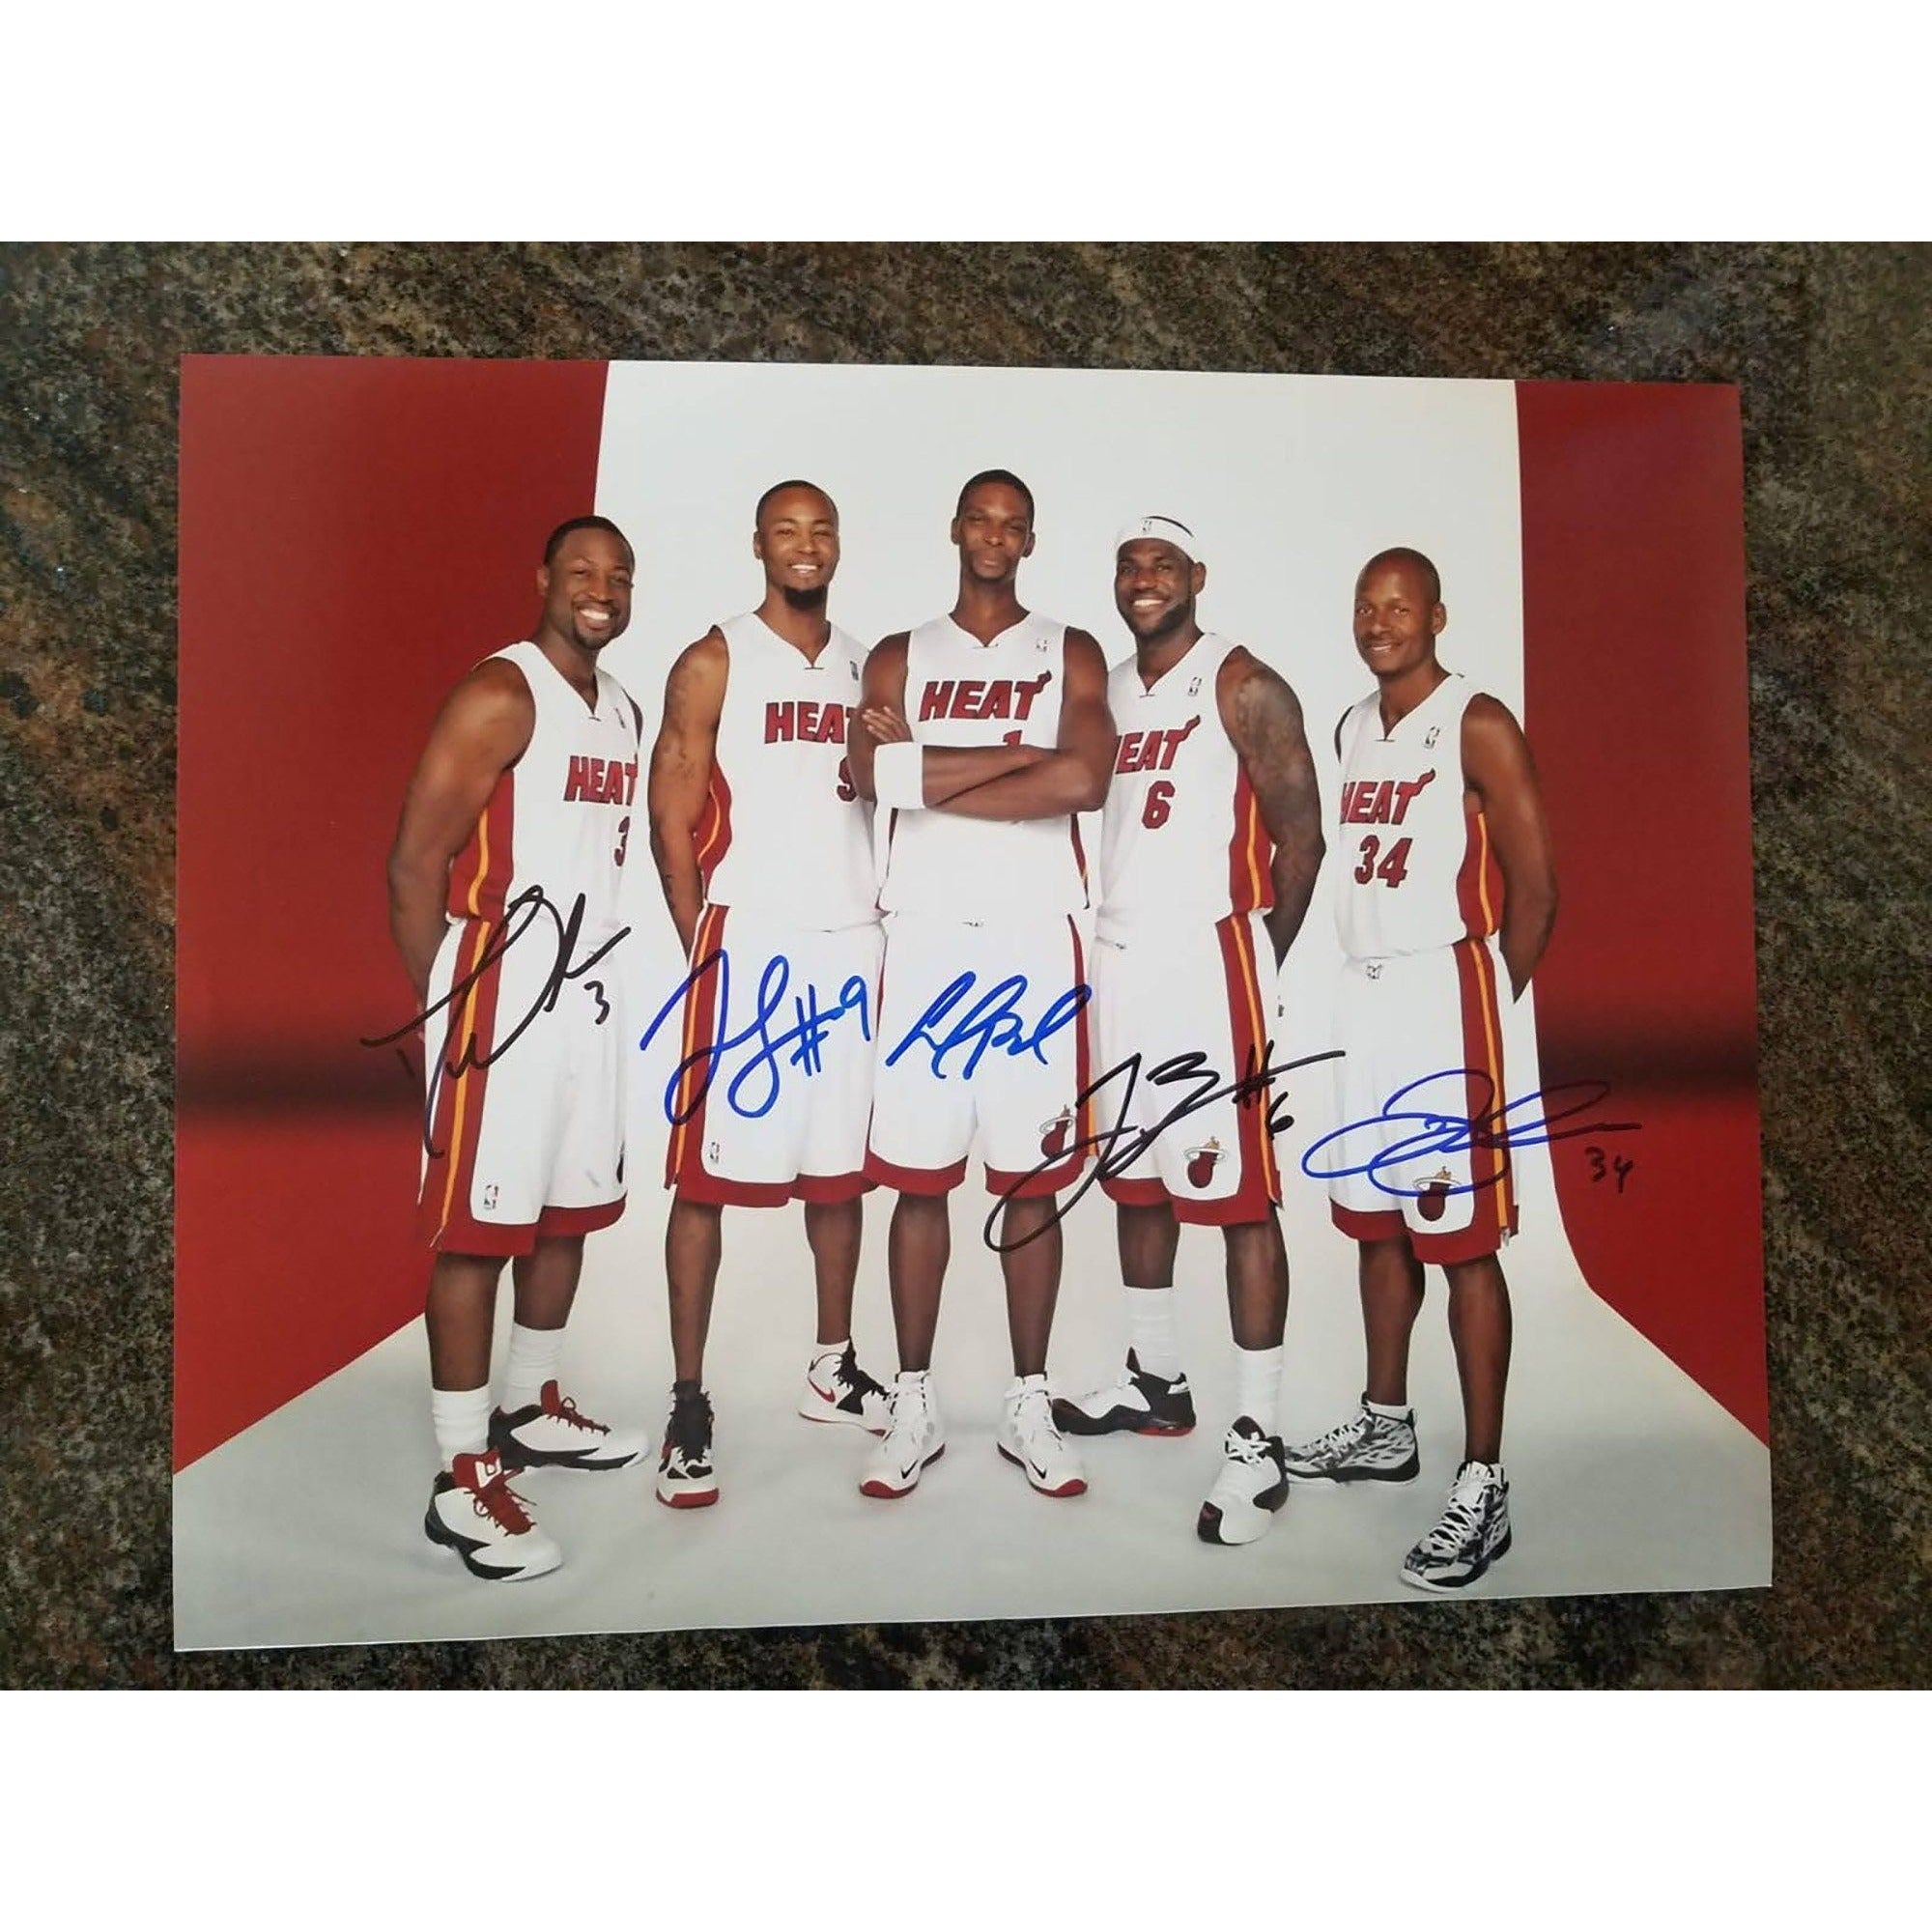 Dwyane Wade, Chris Bosh, LeBron James, Ray Allen 11 by 14 signed photo